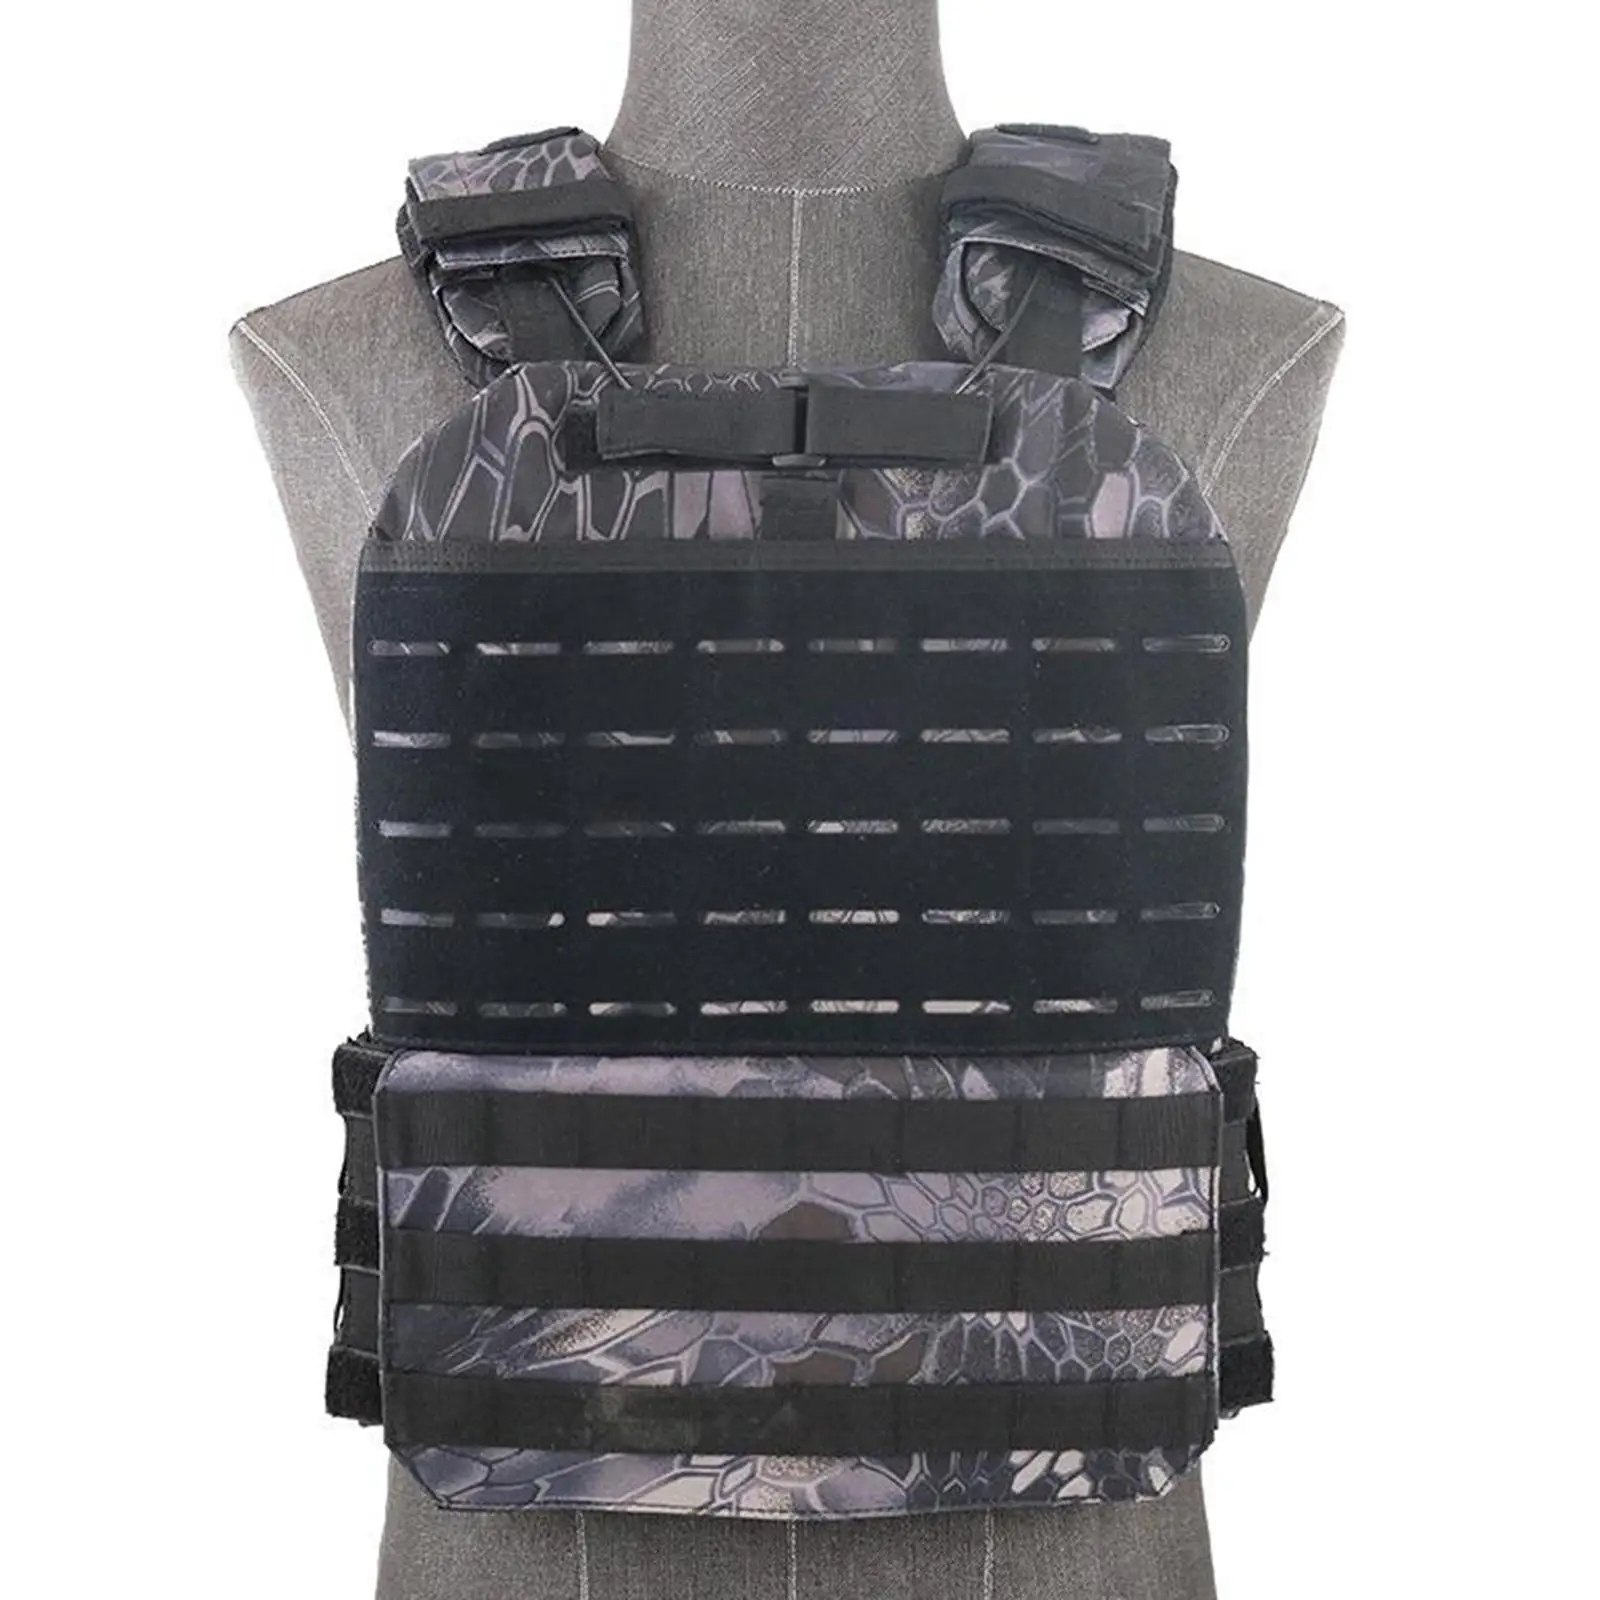   Amphibious Combat Molle Vest Outdoor Hunting Protection Unisex